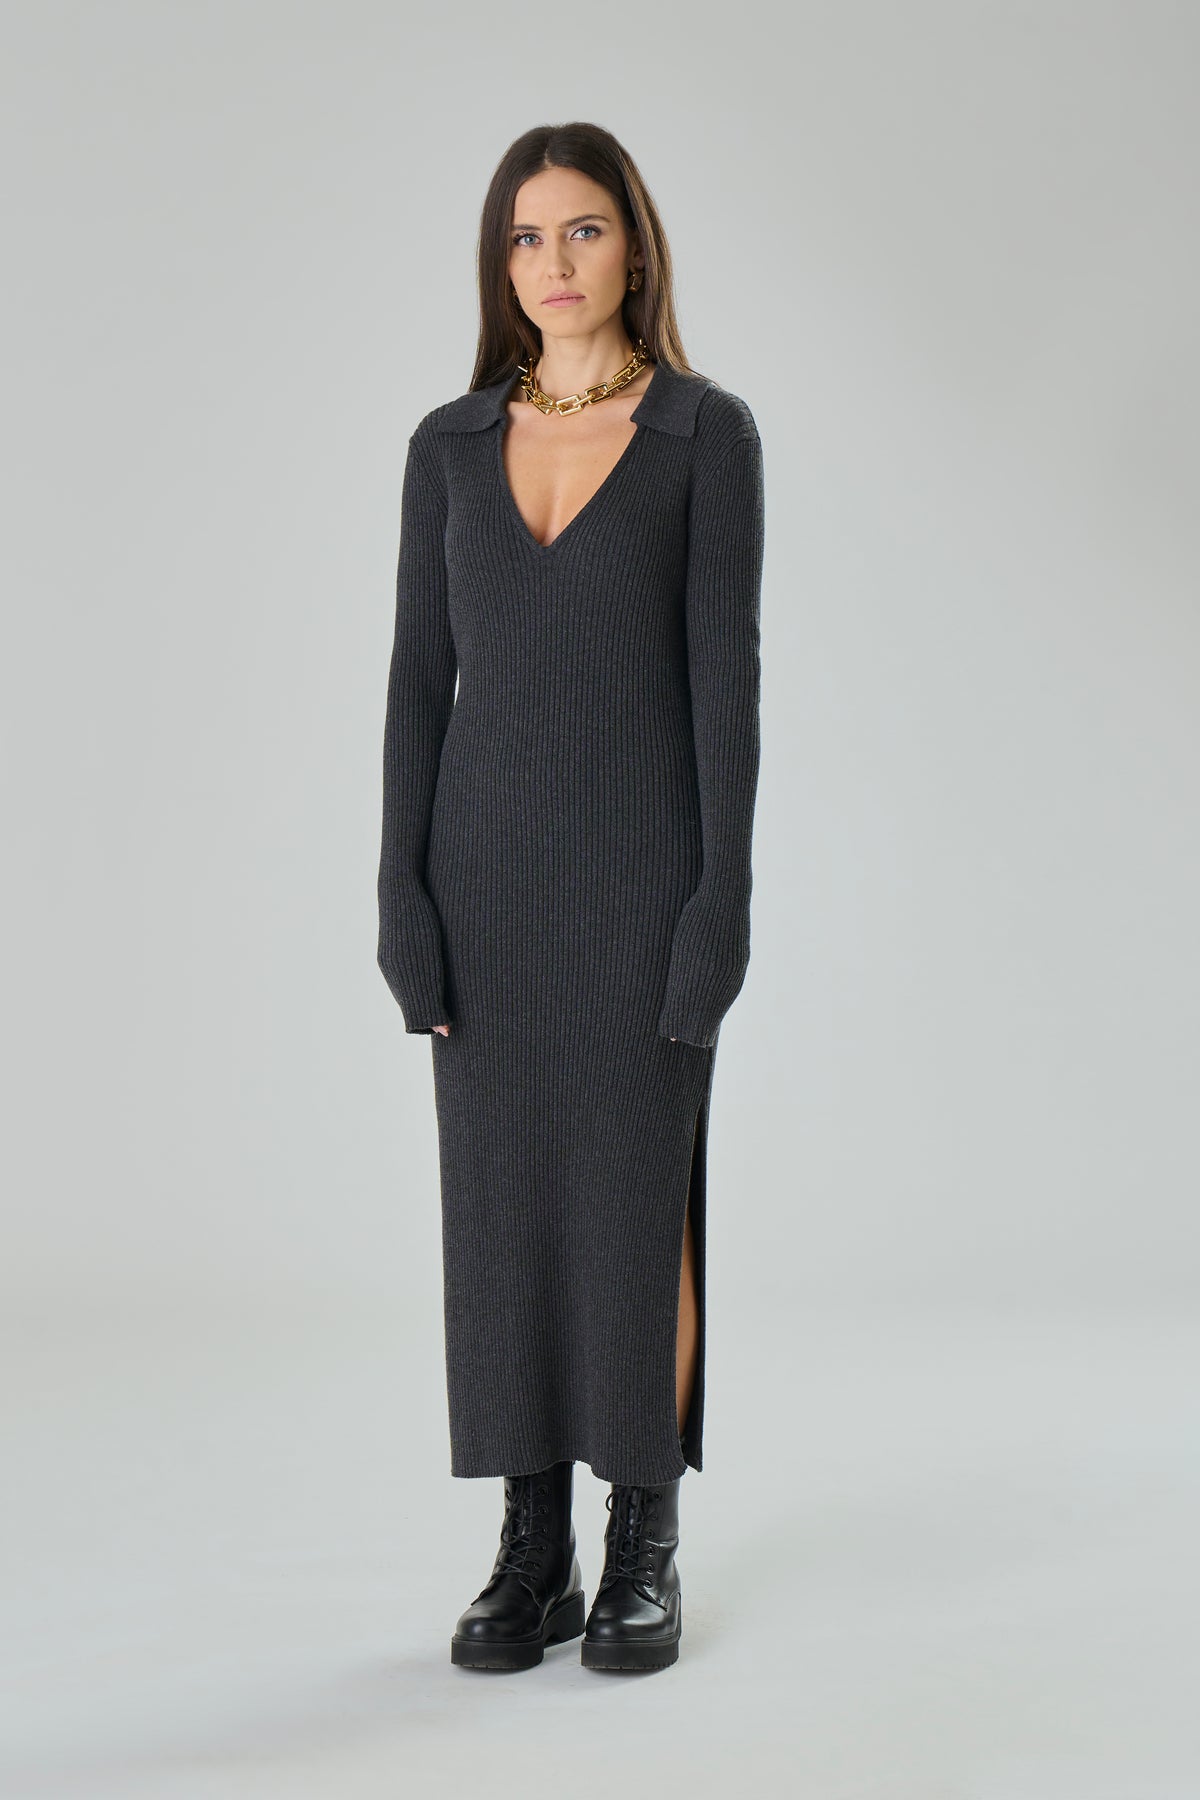 Cashmere blend knit dress - Anita